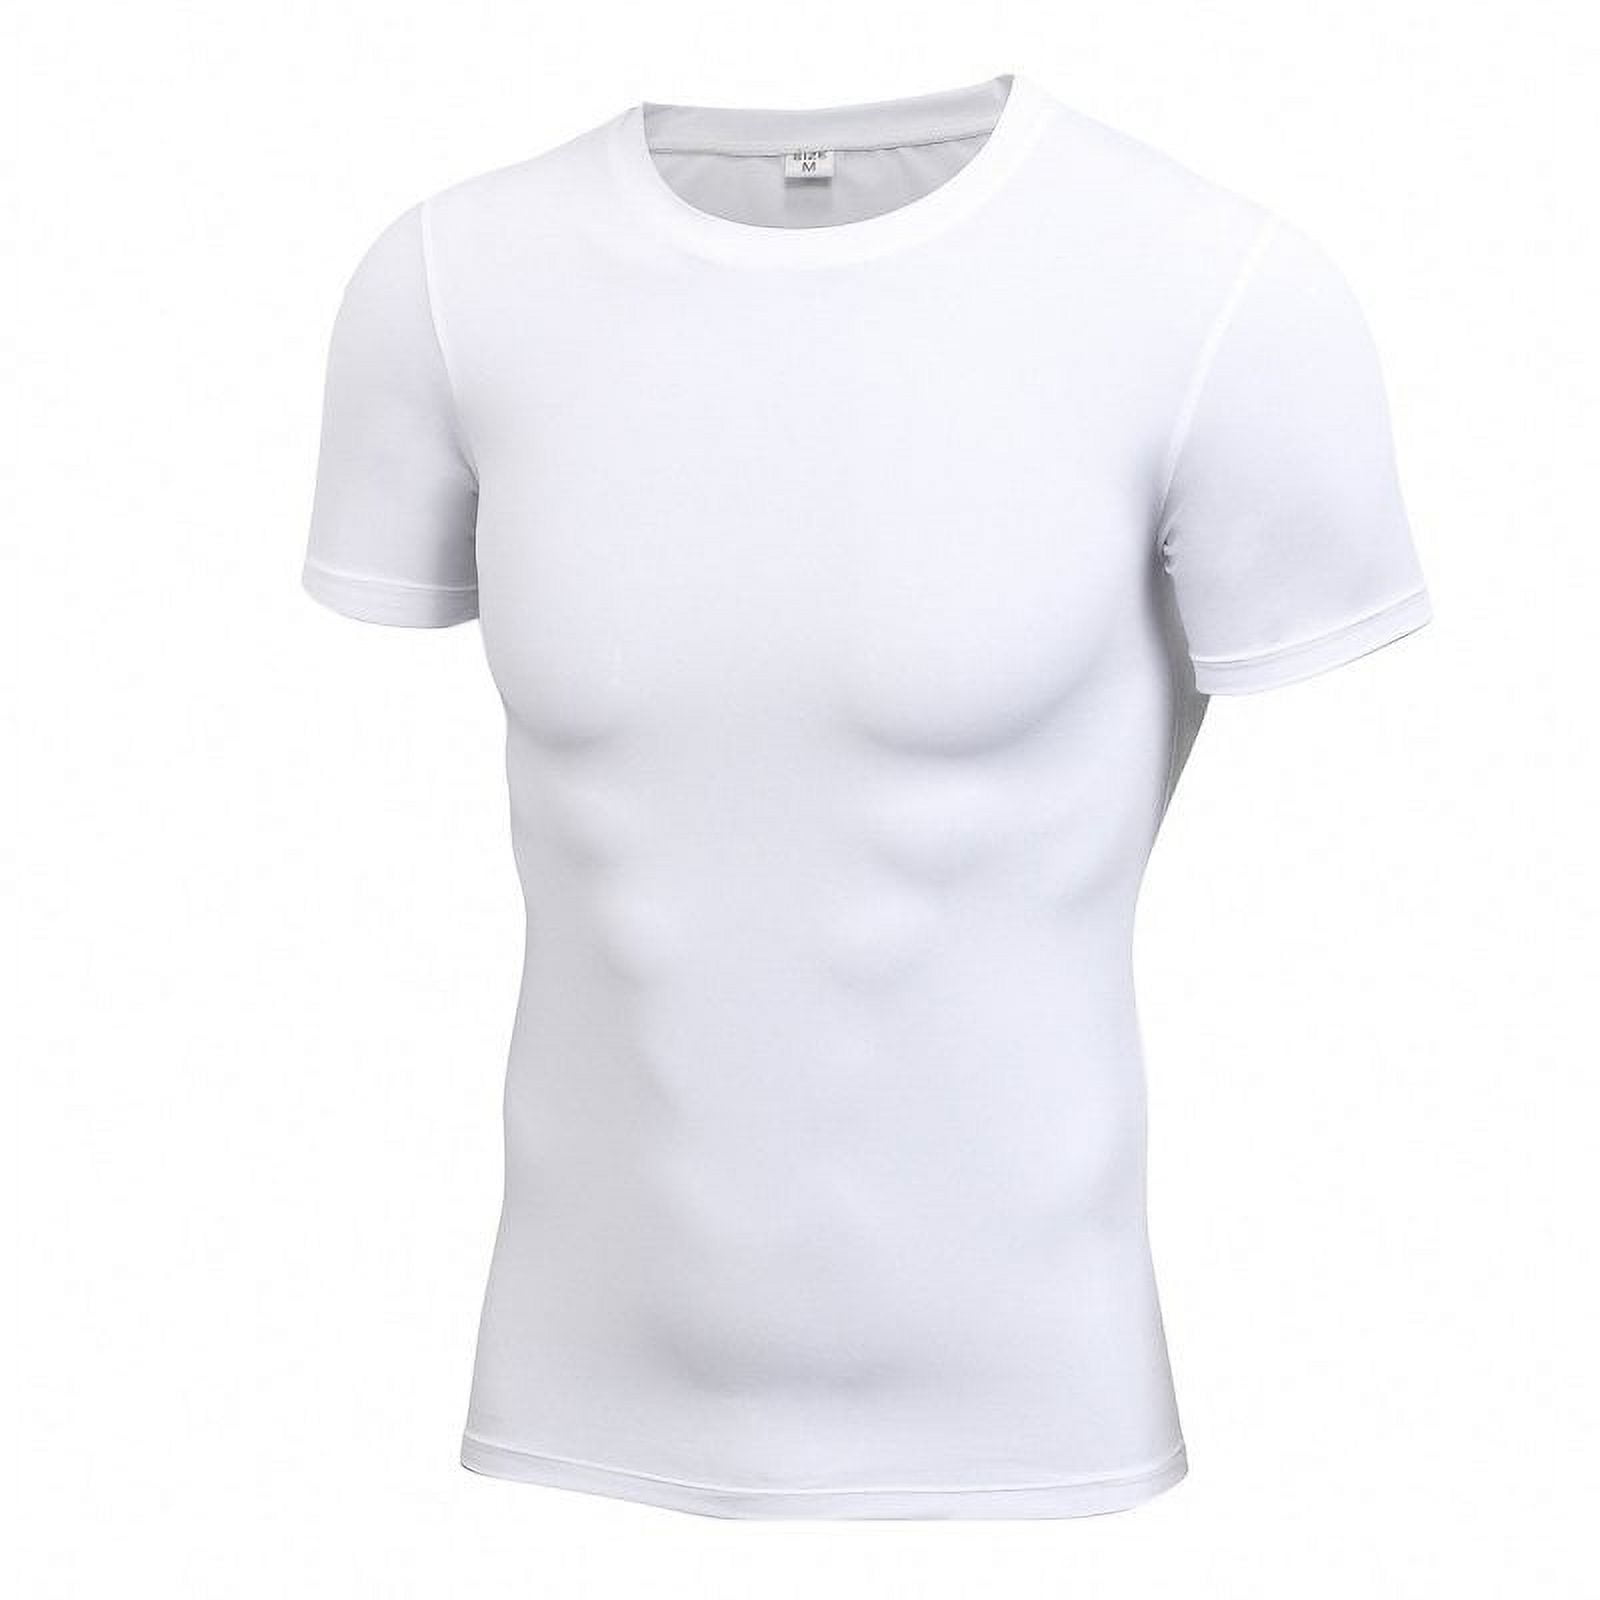 Men's Compression T-shirt Round collar Quick-drying Elastic Top ...